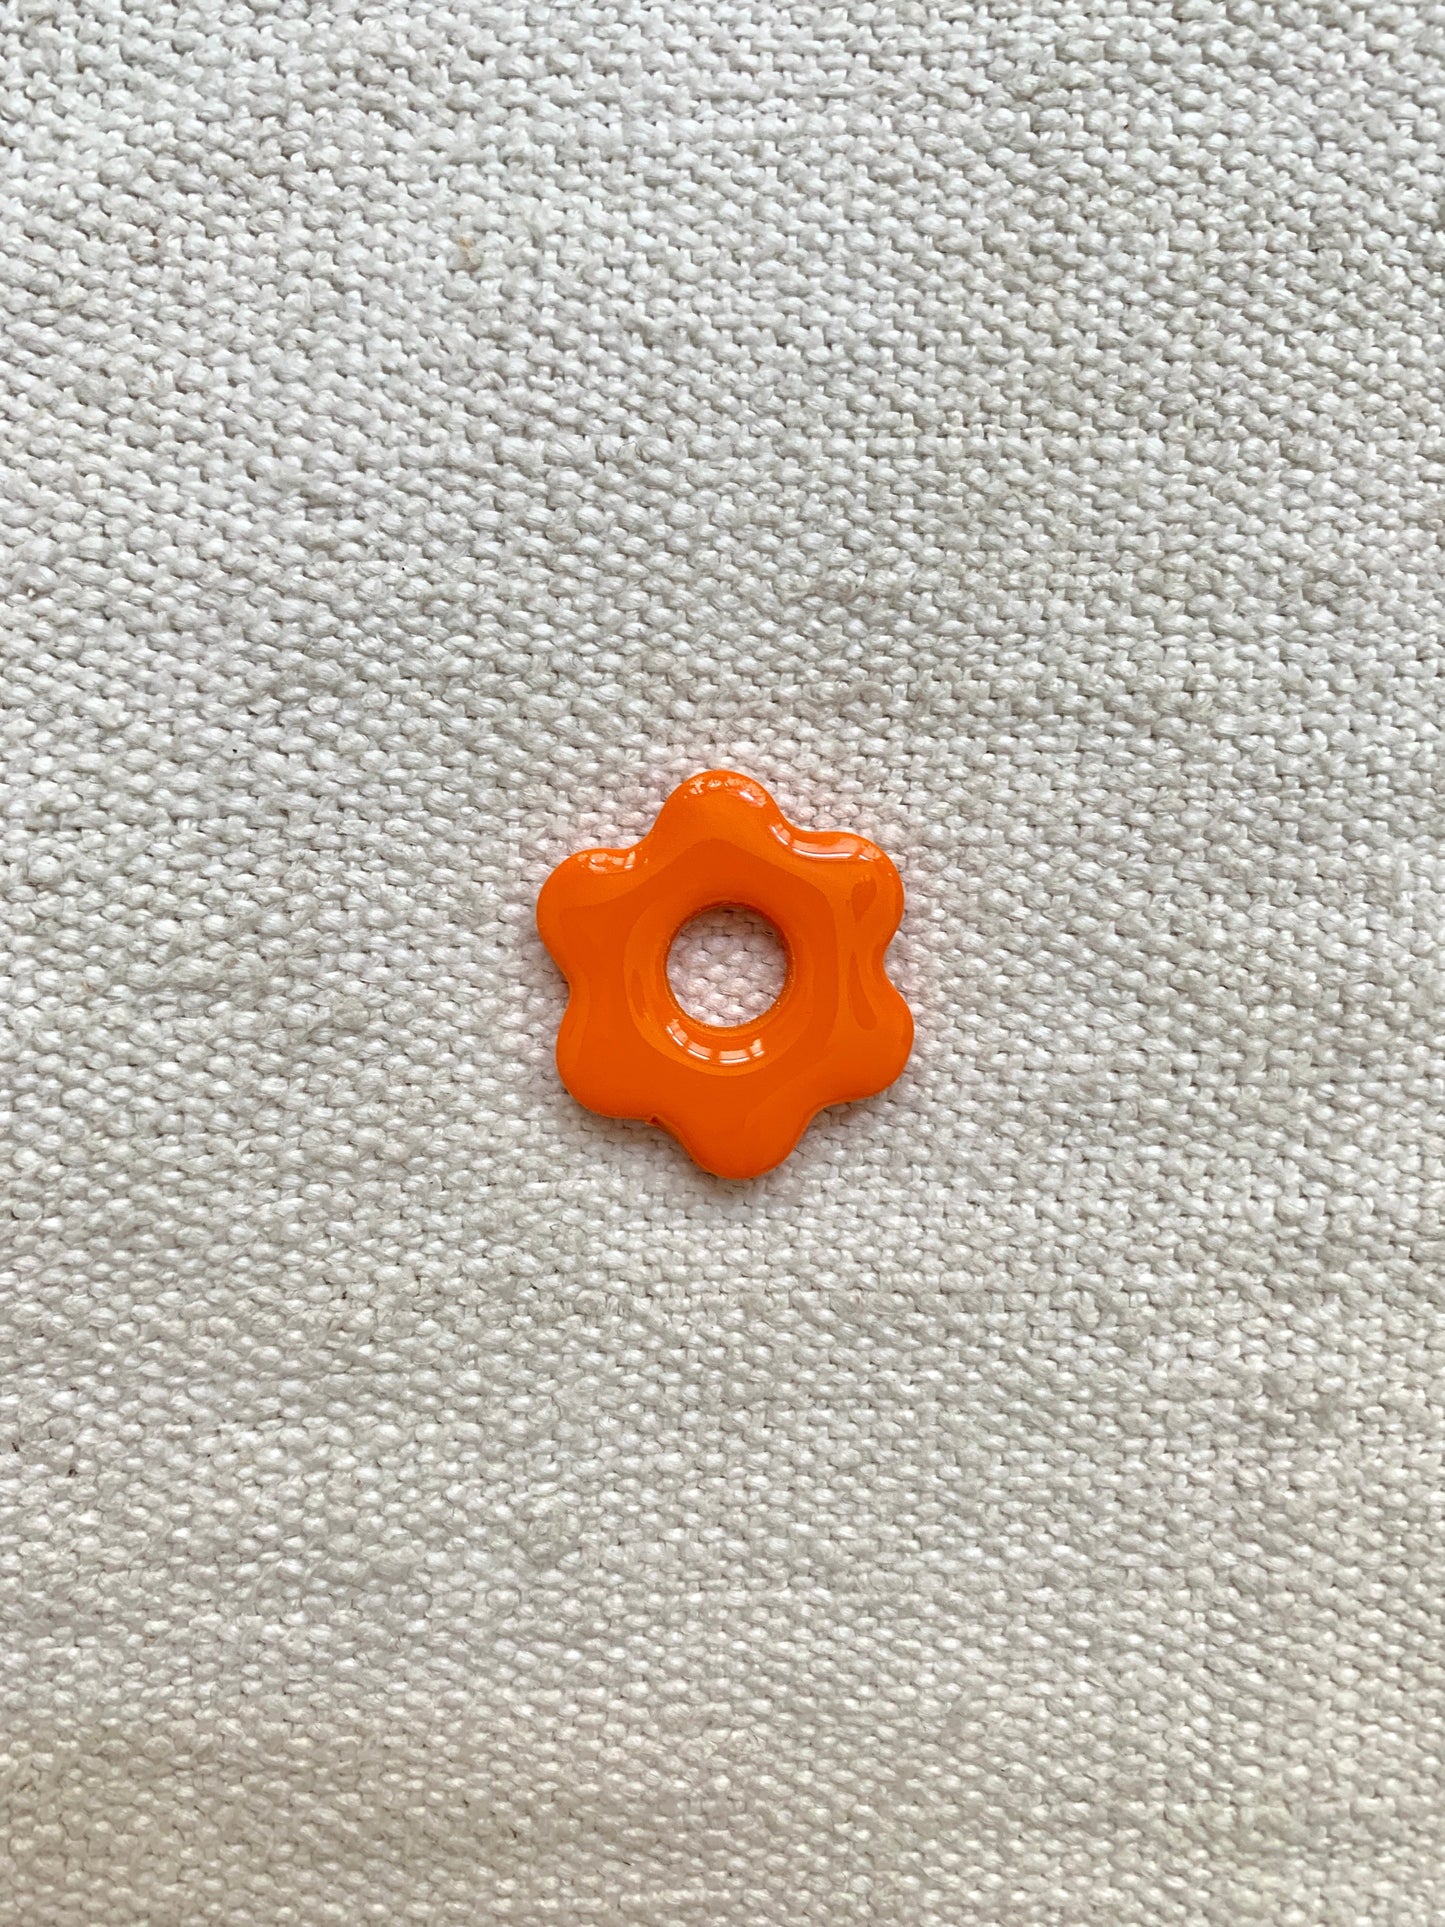 LOUISE flower earrings (charms) - Bright orange